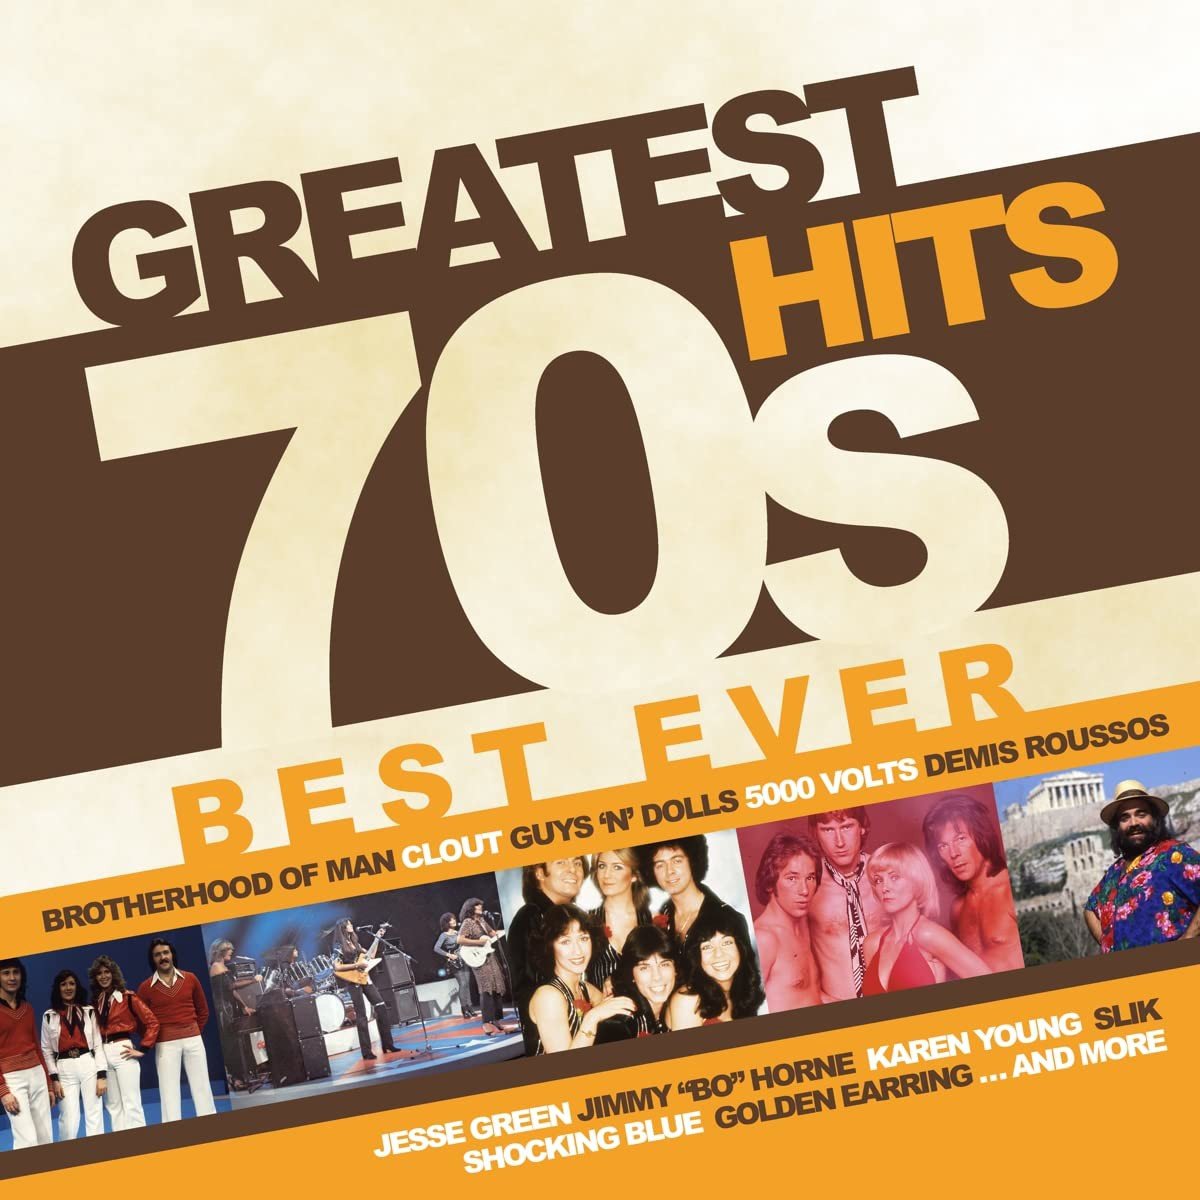 Various - Greatest 70s Hits Best Ever (Yellow Vinyl) (LP)